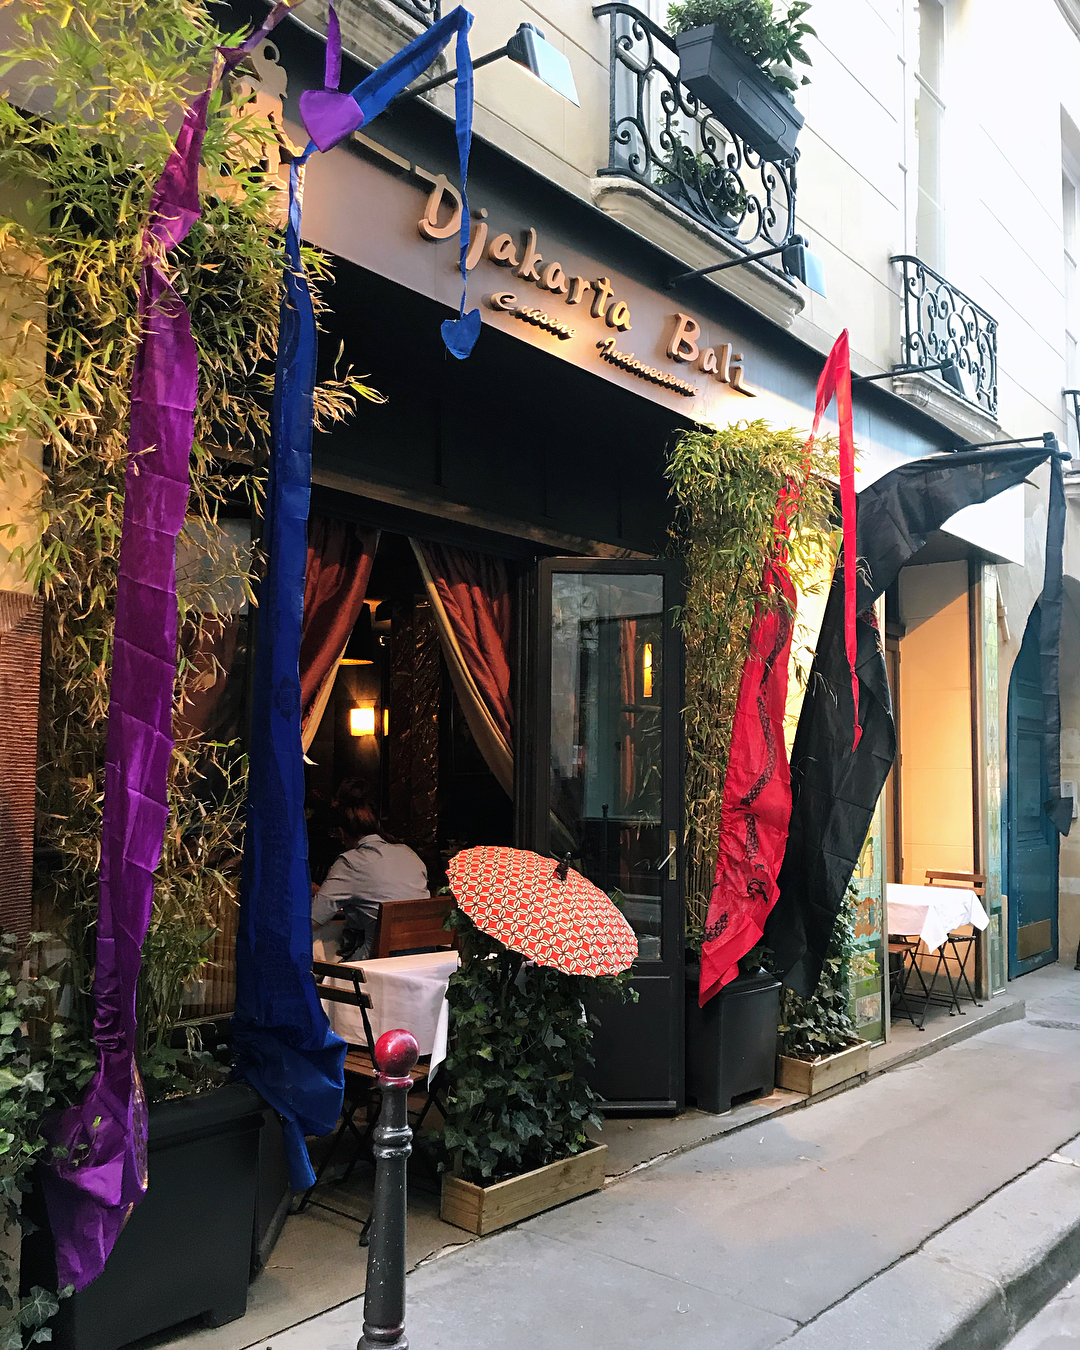 Restoran Djakarta Bali di Paris | Sumber: Travelingyuk